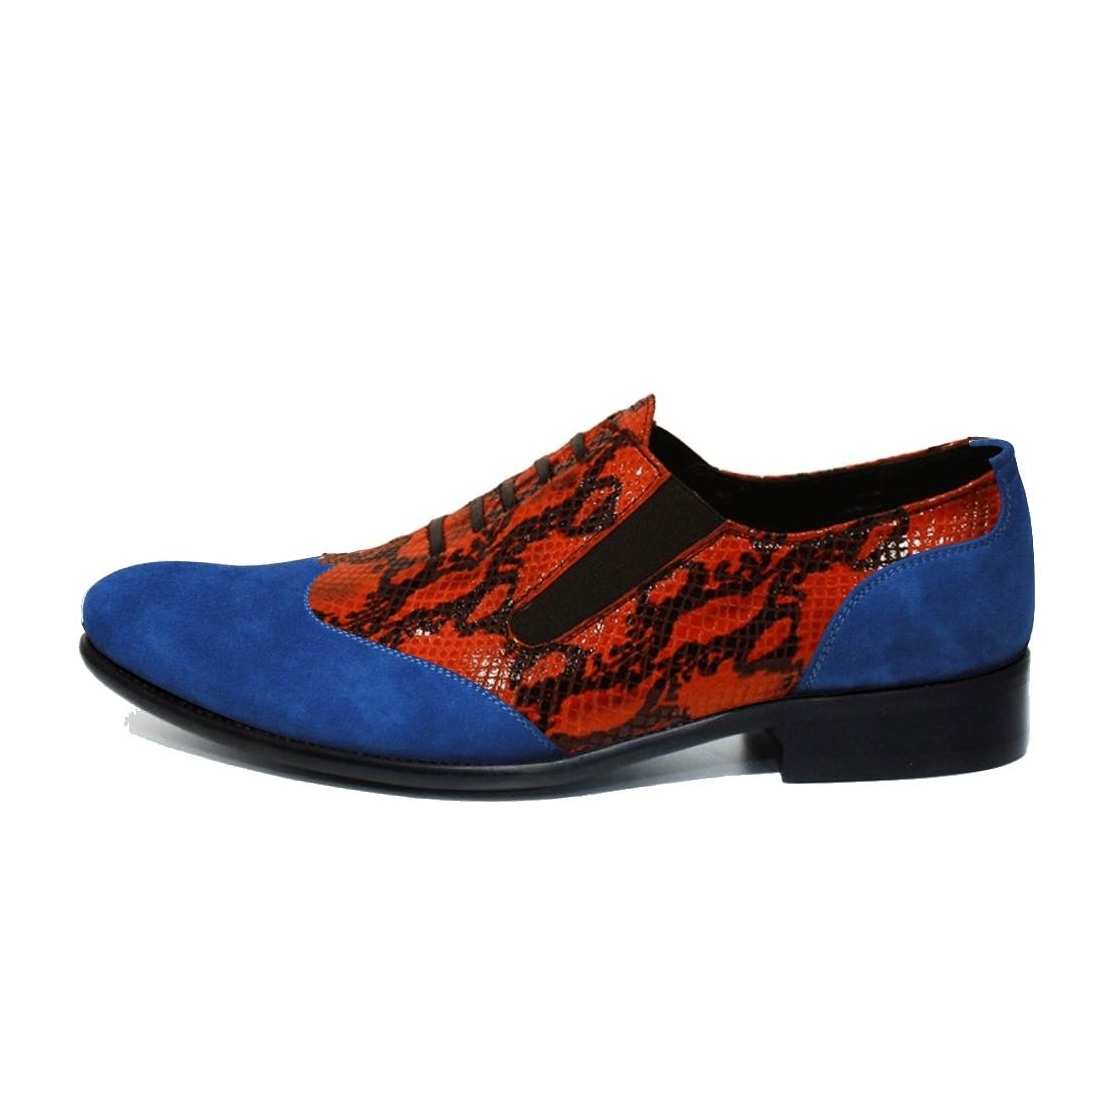 Modello Baccalto - Buty Wsuwane - Handmade Colorful Italian Leather Shoes